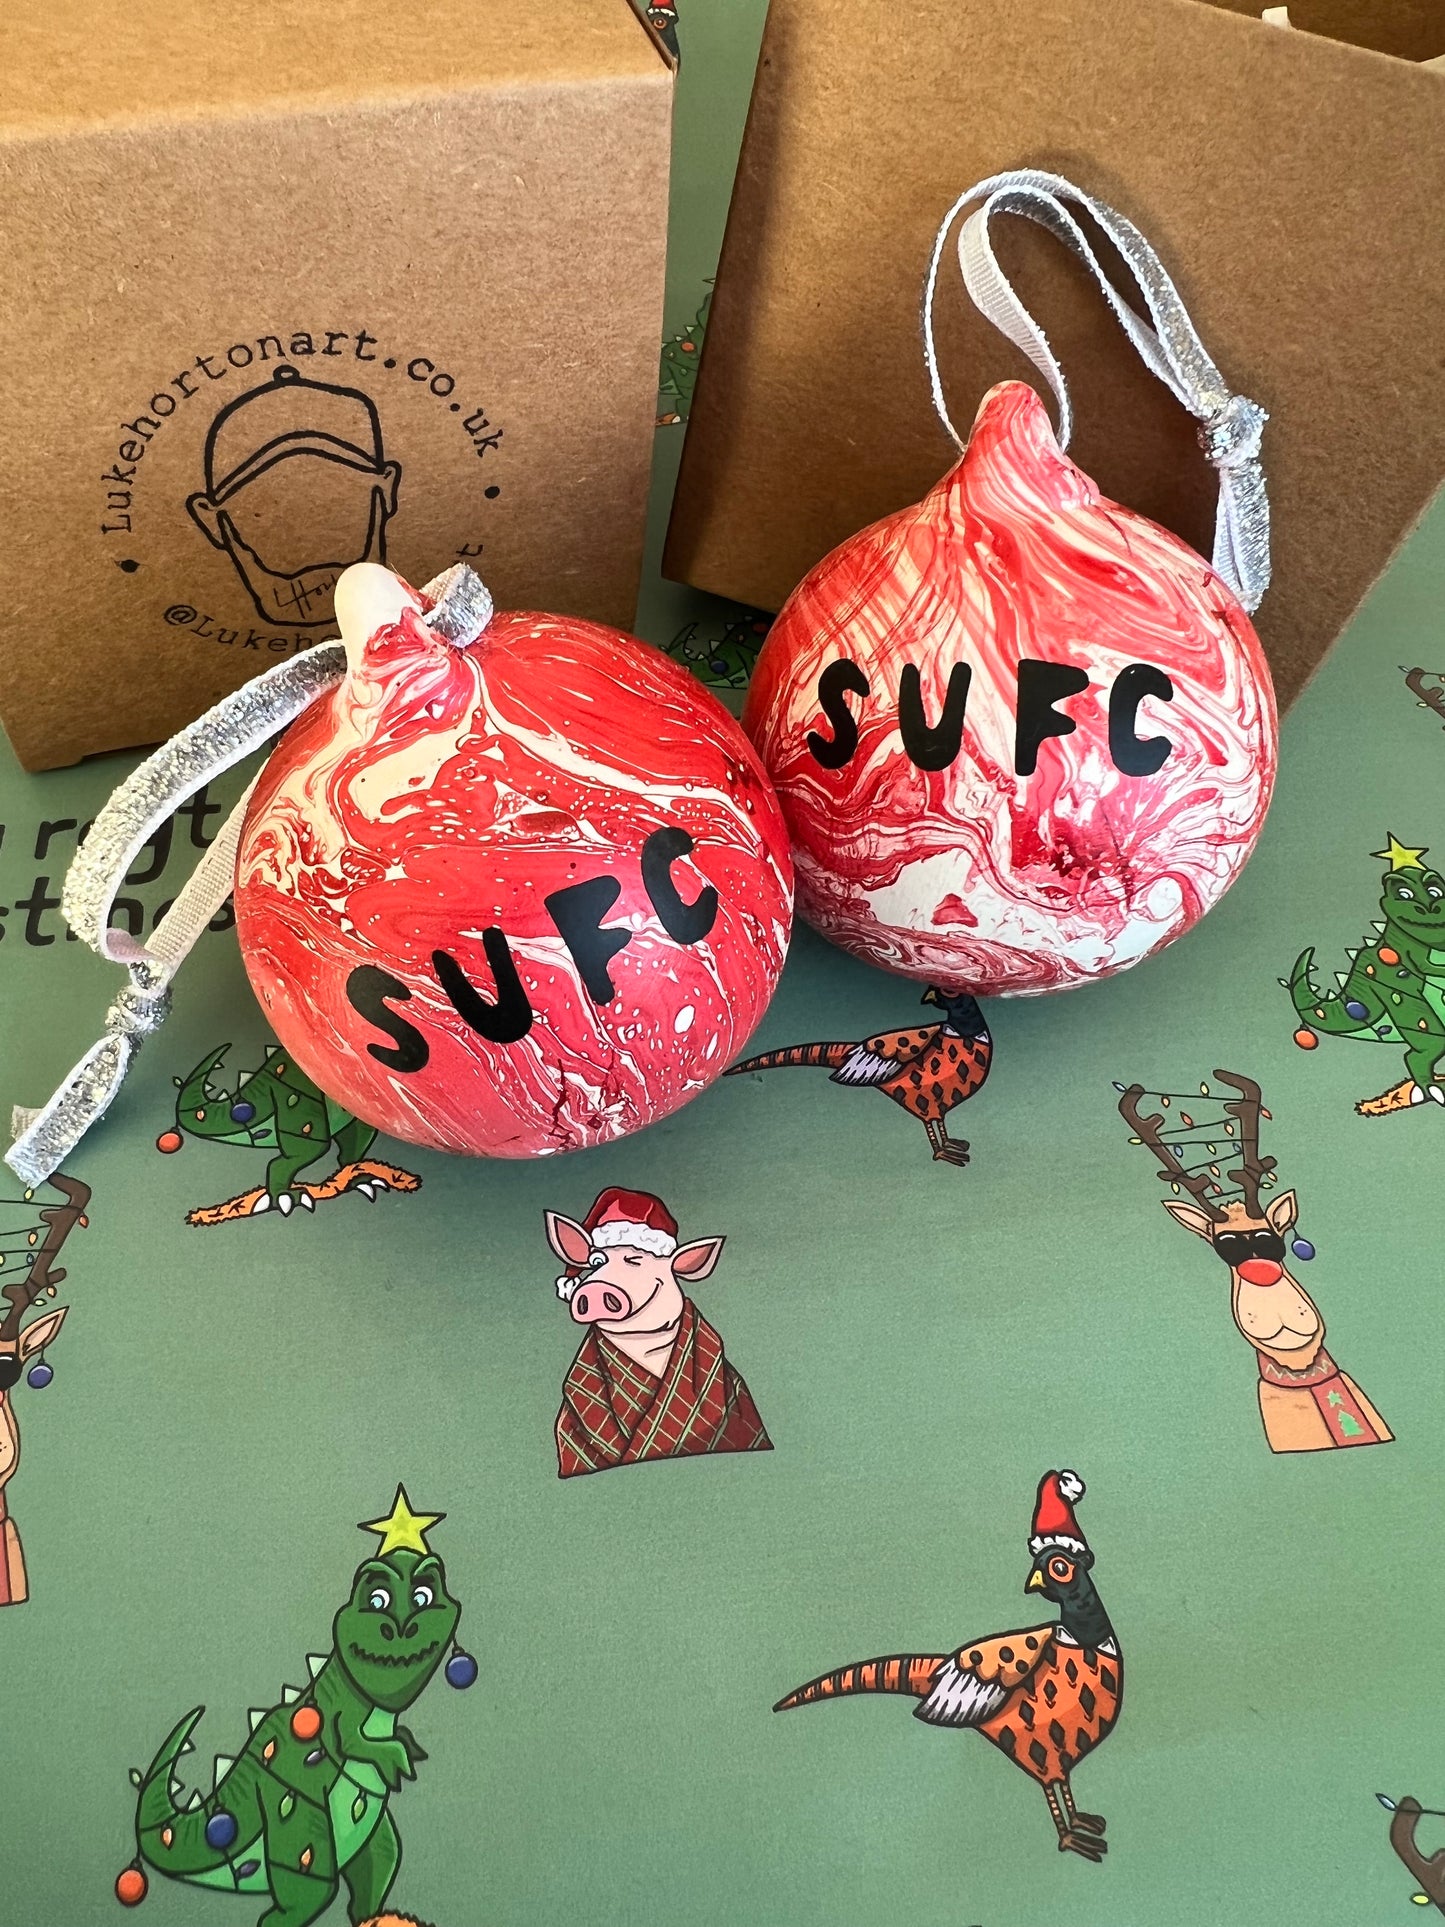 SUFC Bauble - Christmas Bauble